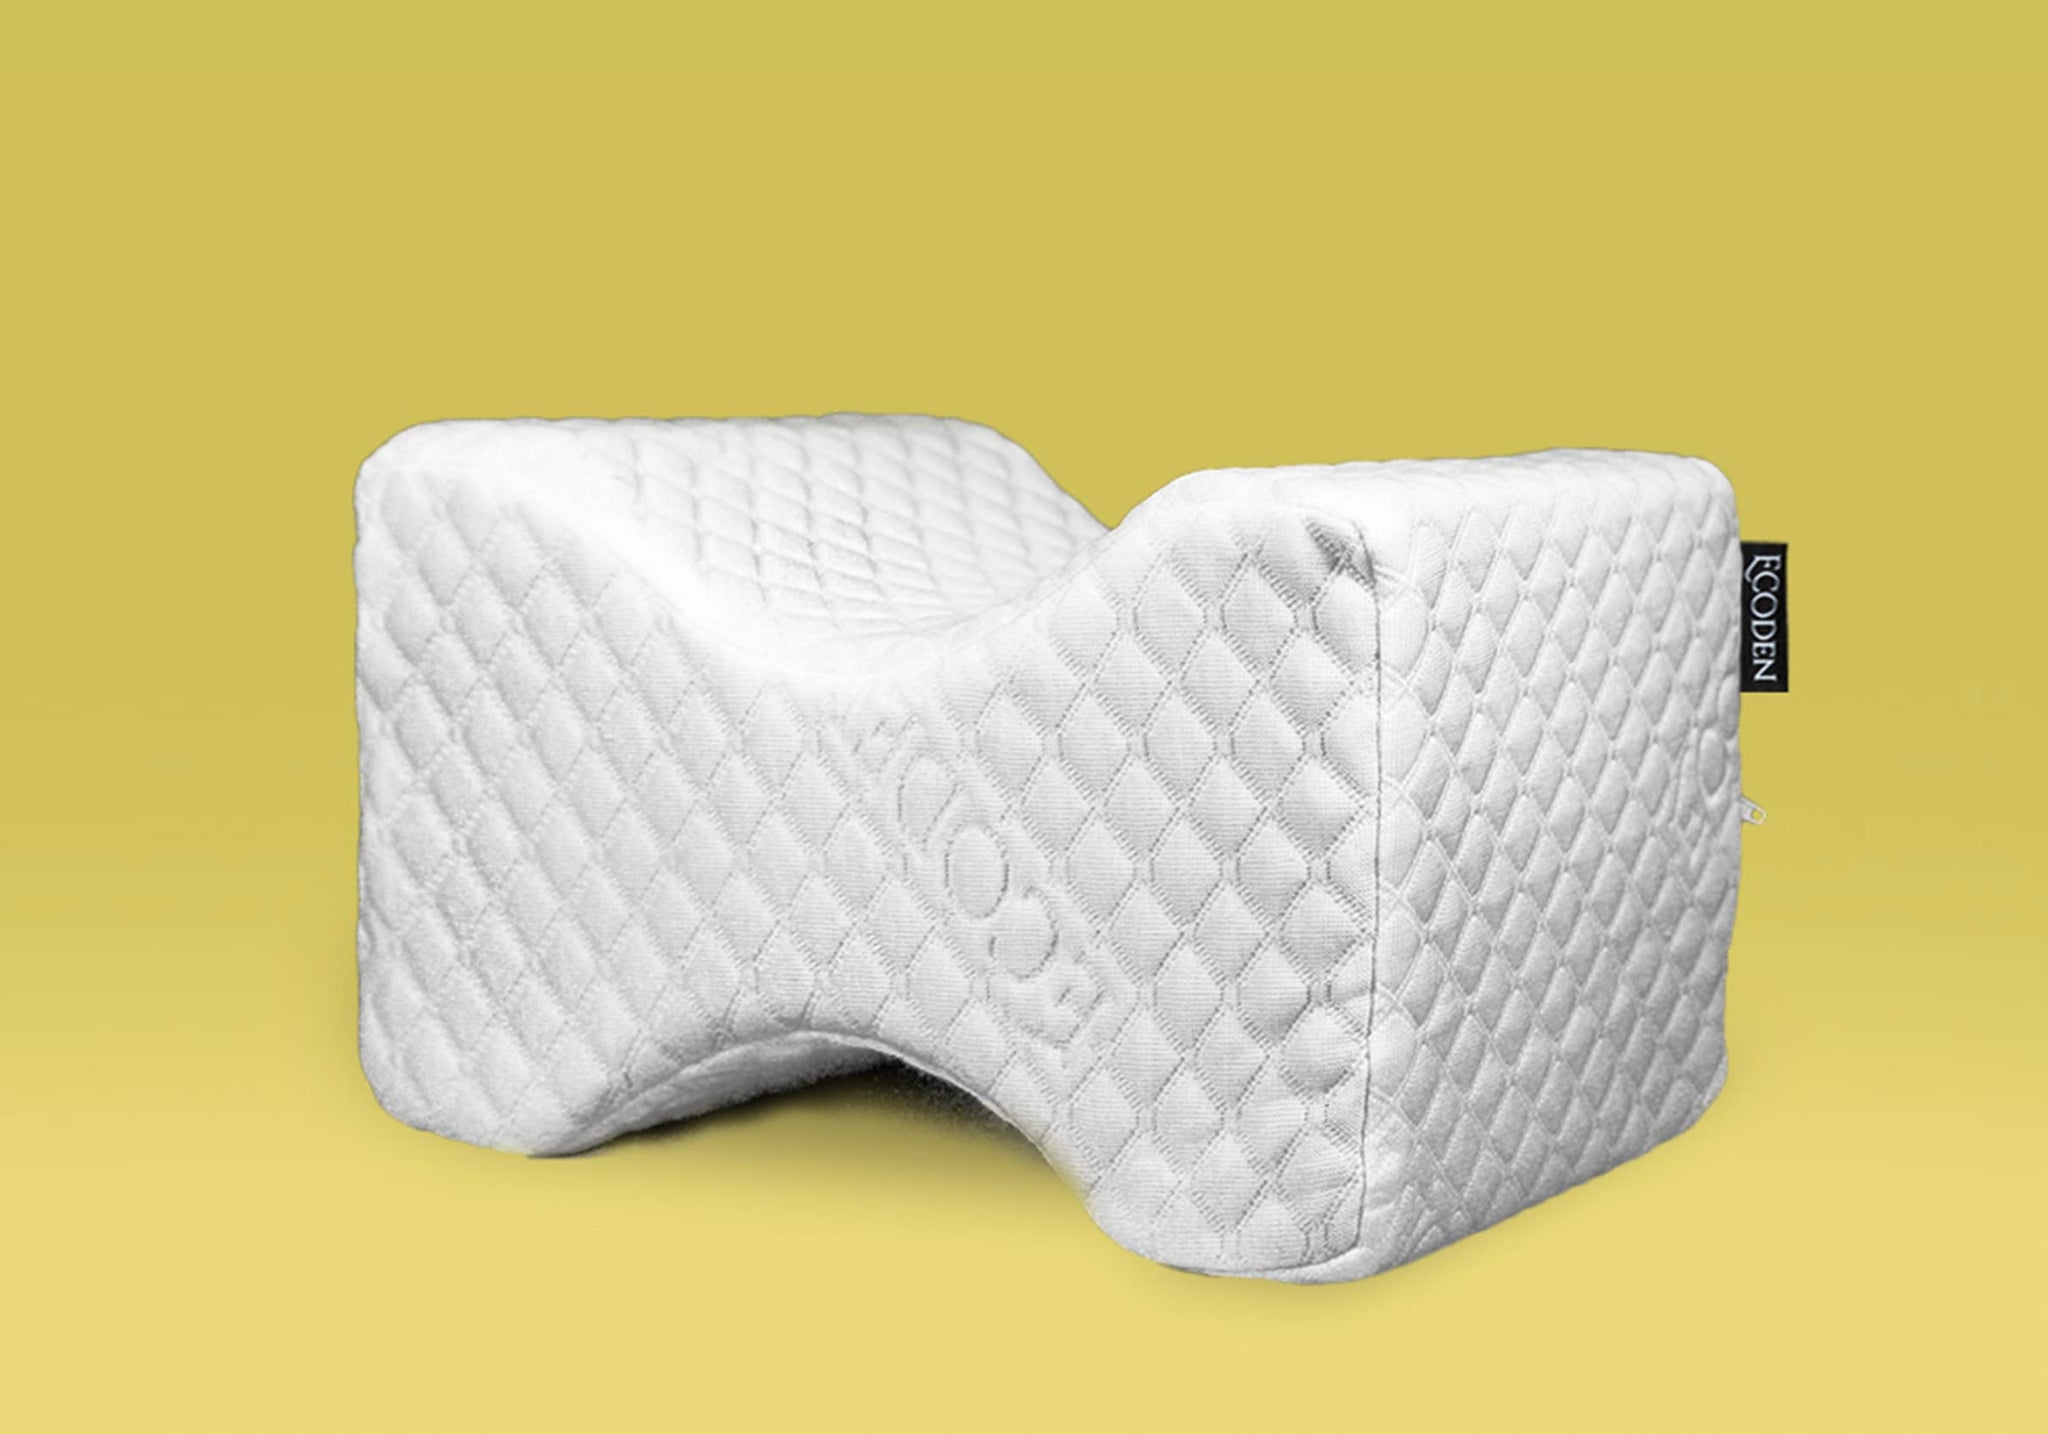 Heart Shaped Memory Foam Knee Pillow for Hip Pain Sciatica